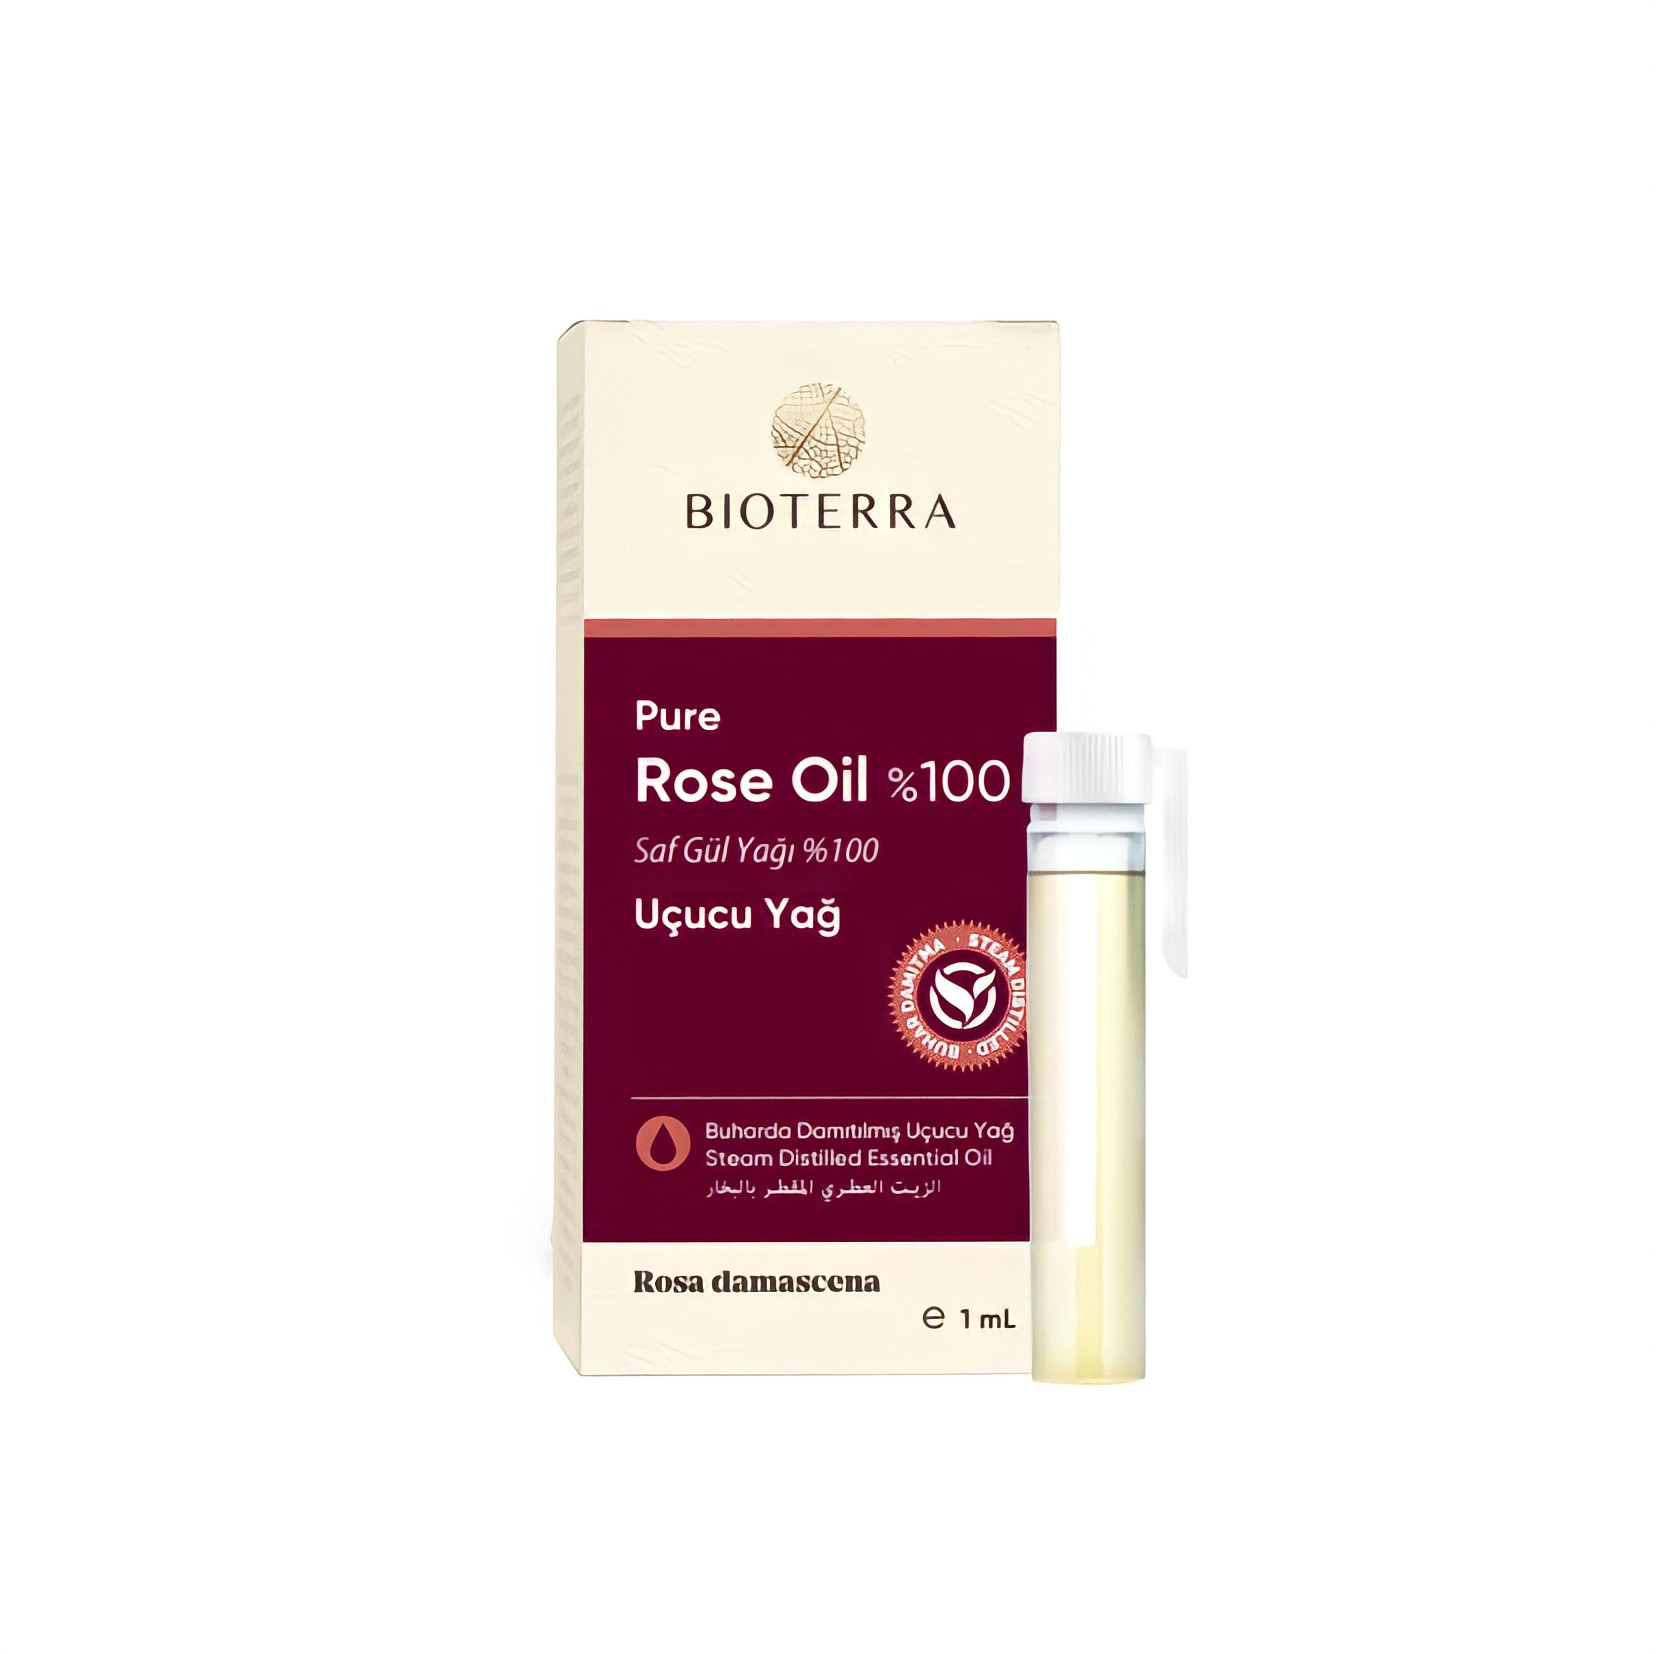 Bioterra Organic Rose Oil Essence 100% 1 ml